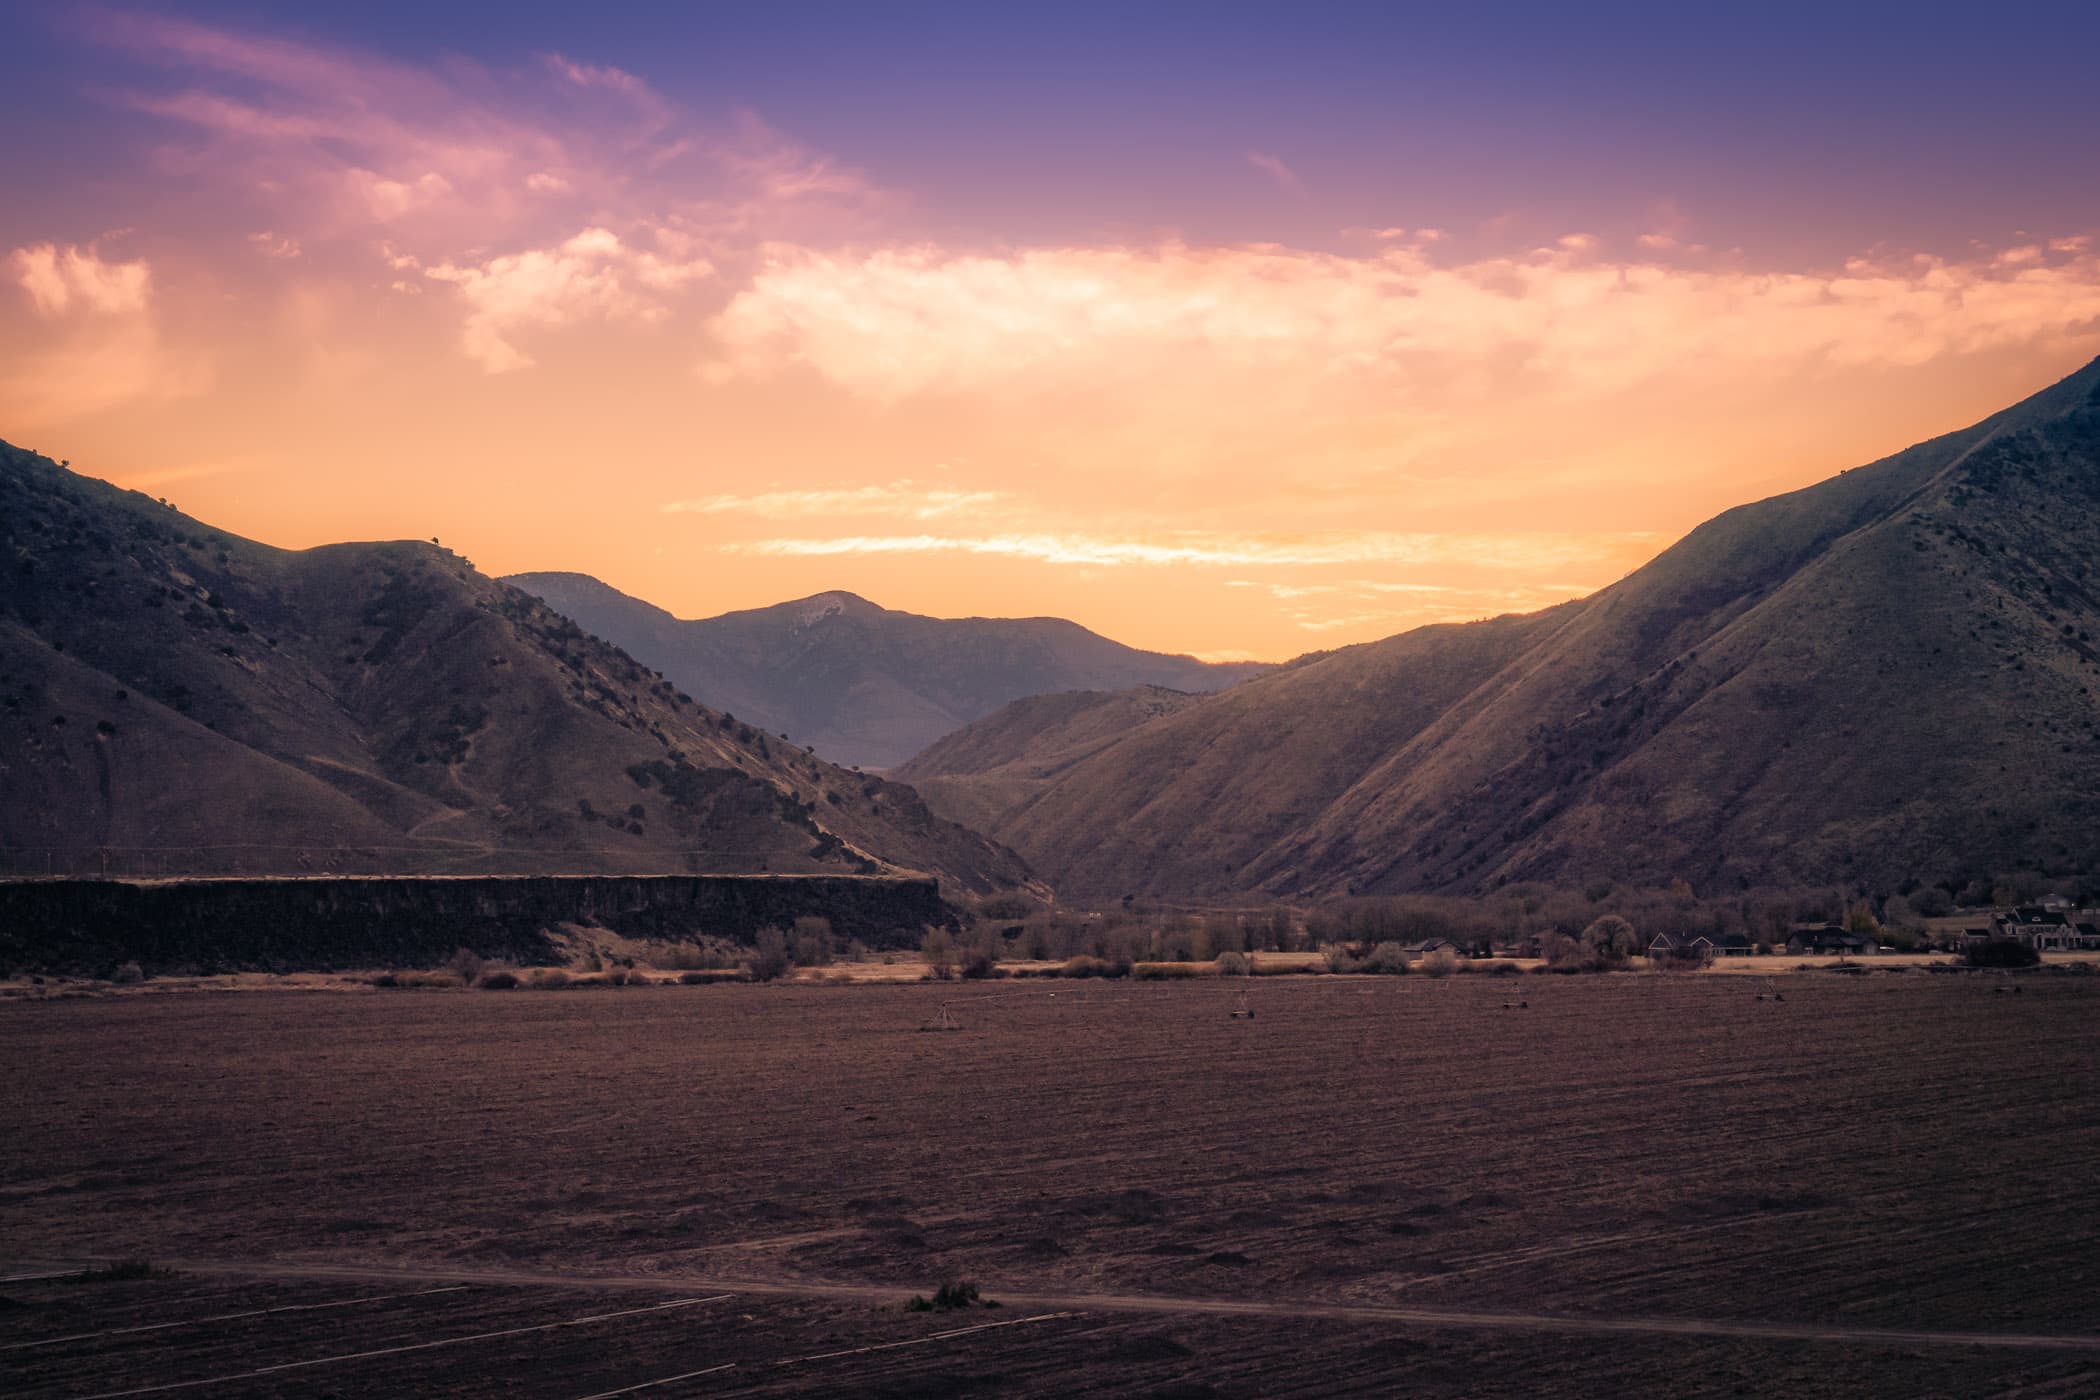 The sun rises over farmland nestled between mountains on the outskirts of Pocatello, Idaho.